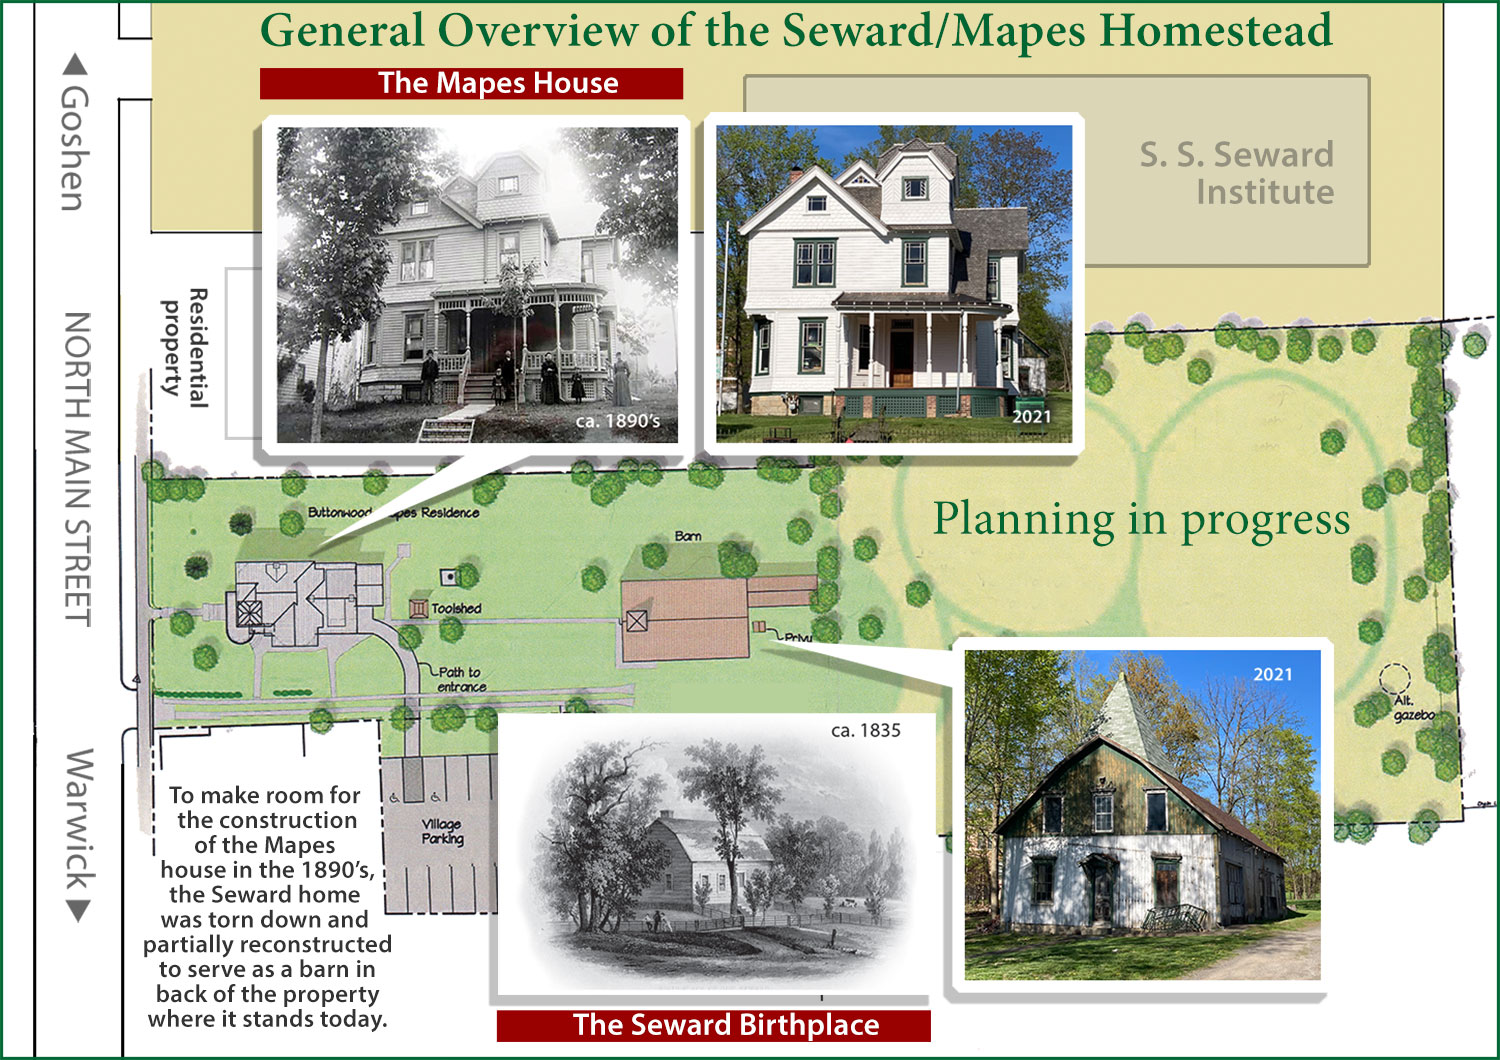 The Seward/Mapes Homestead